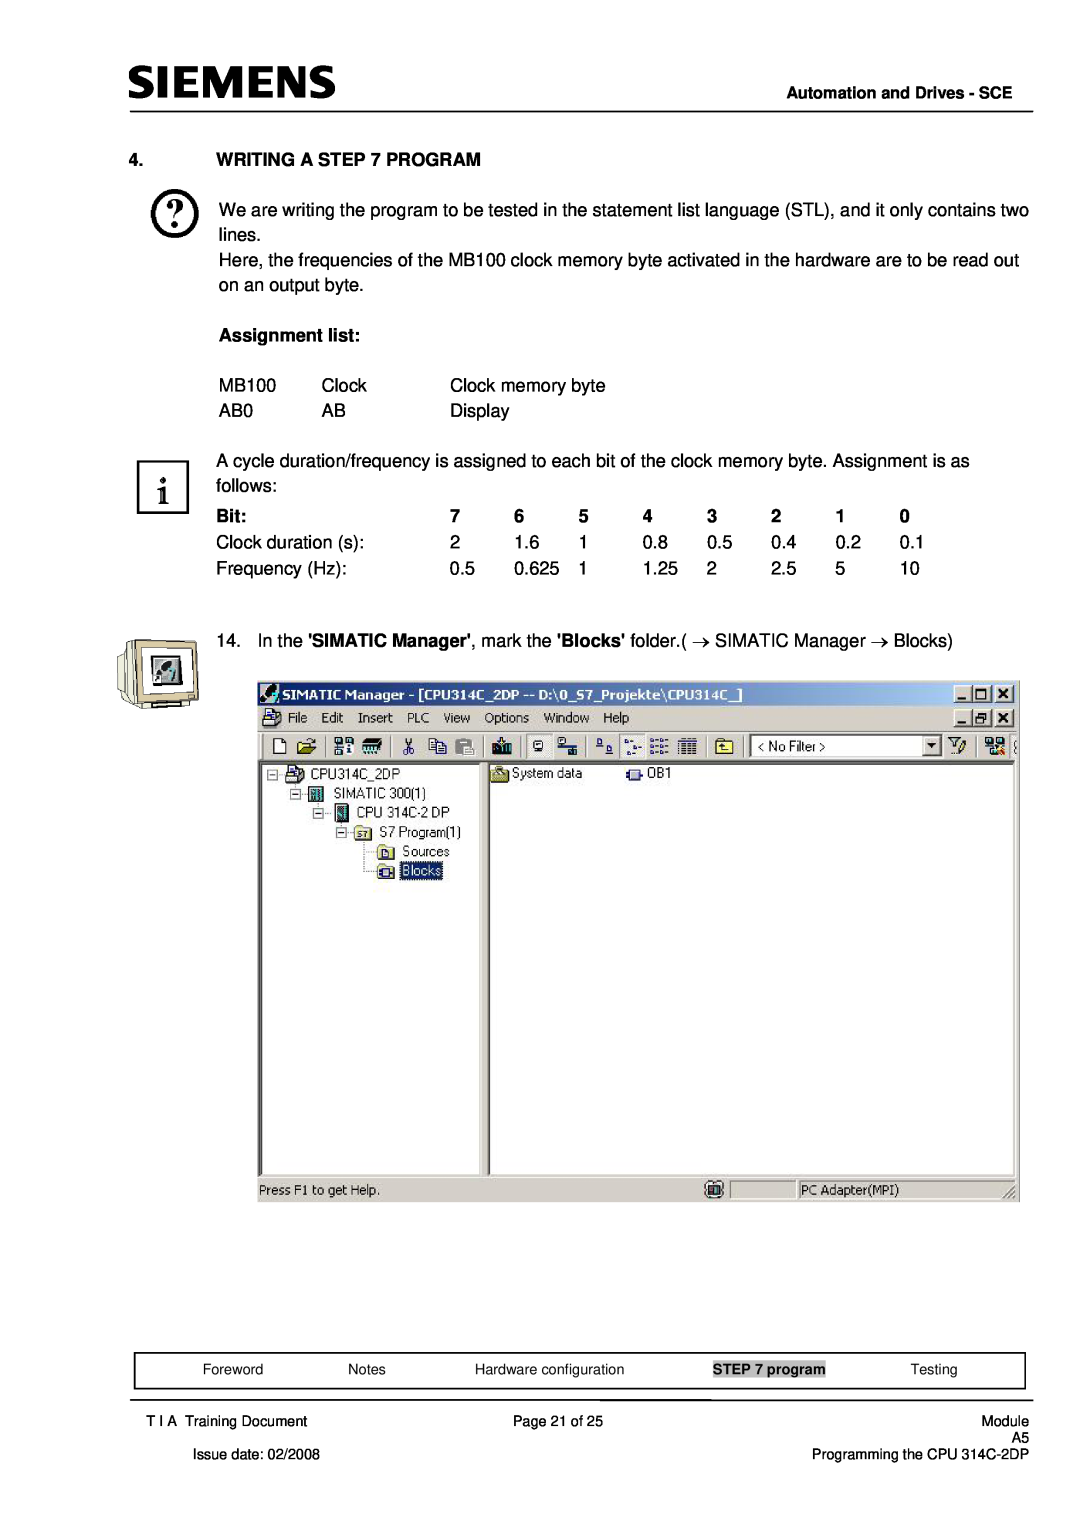 Siemens programming the cpu 314c-2dp manual Writing A Program, Assignment list 